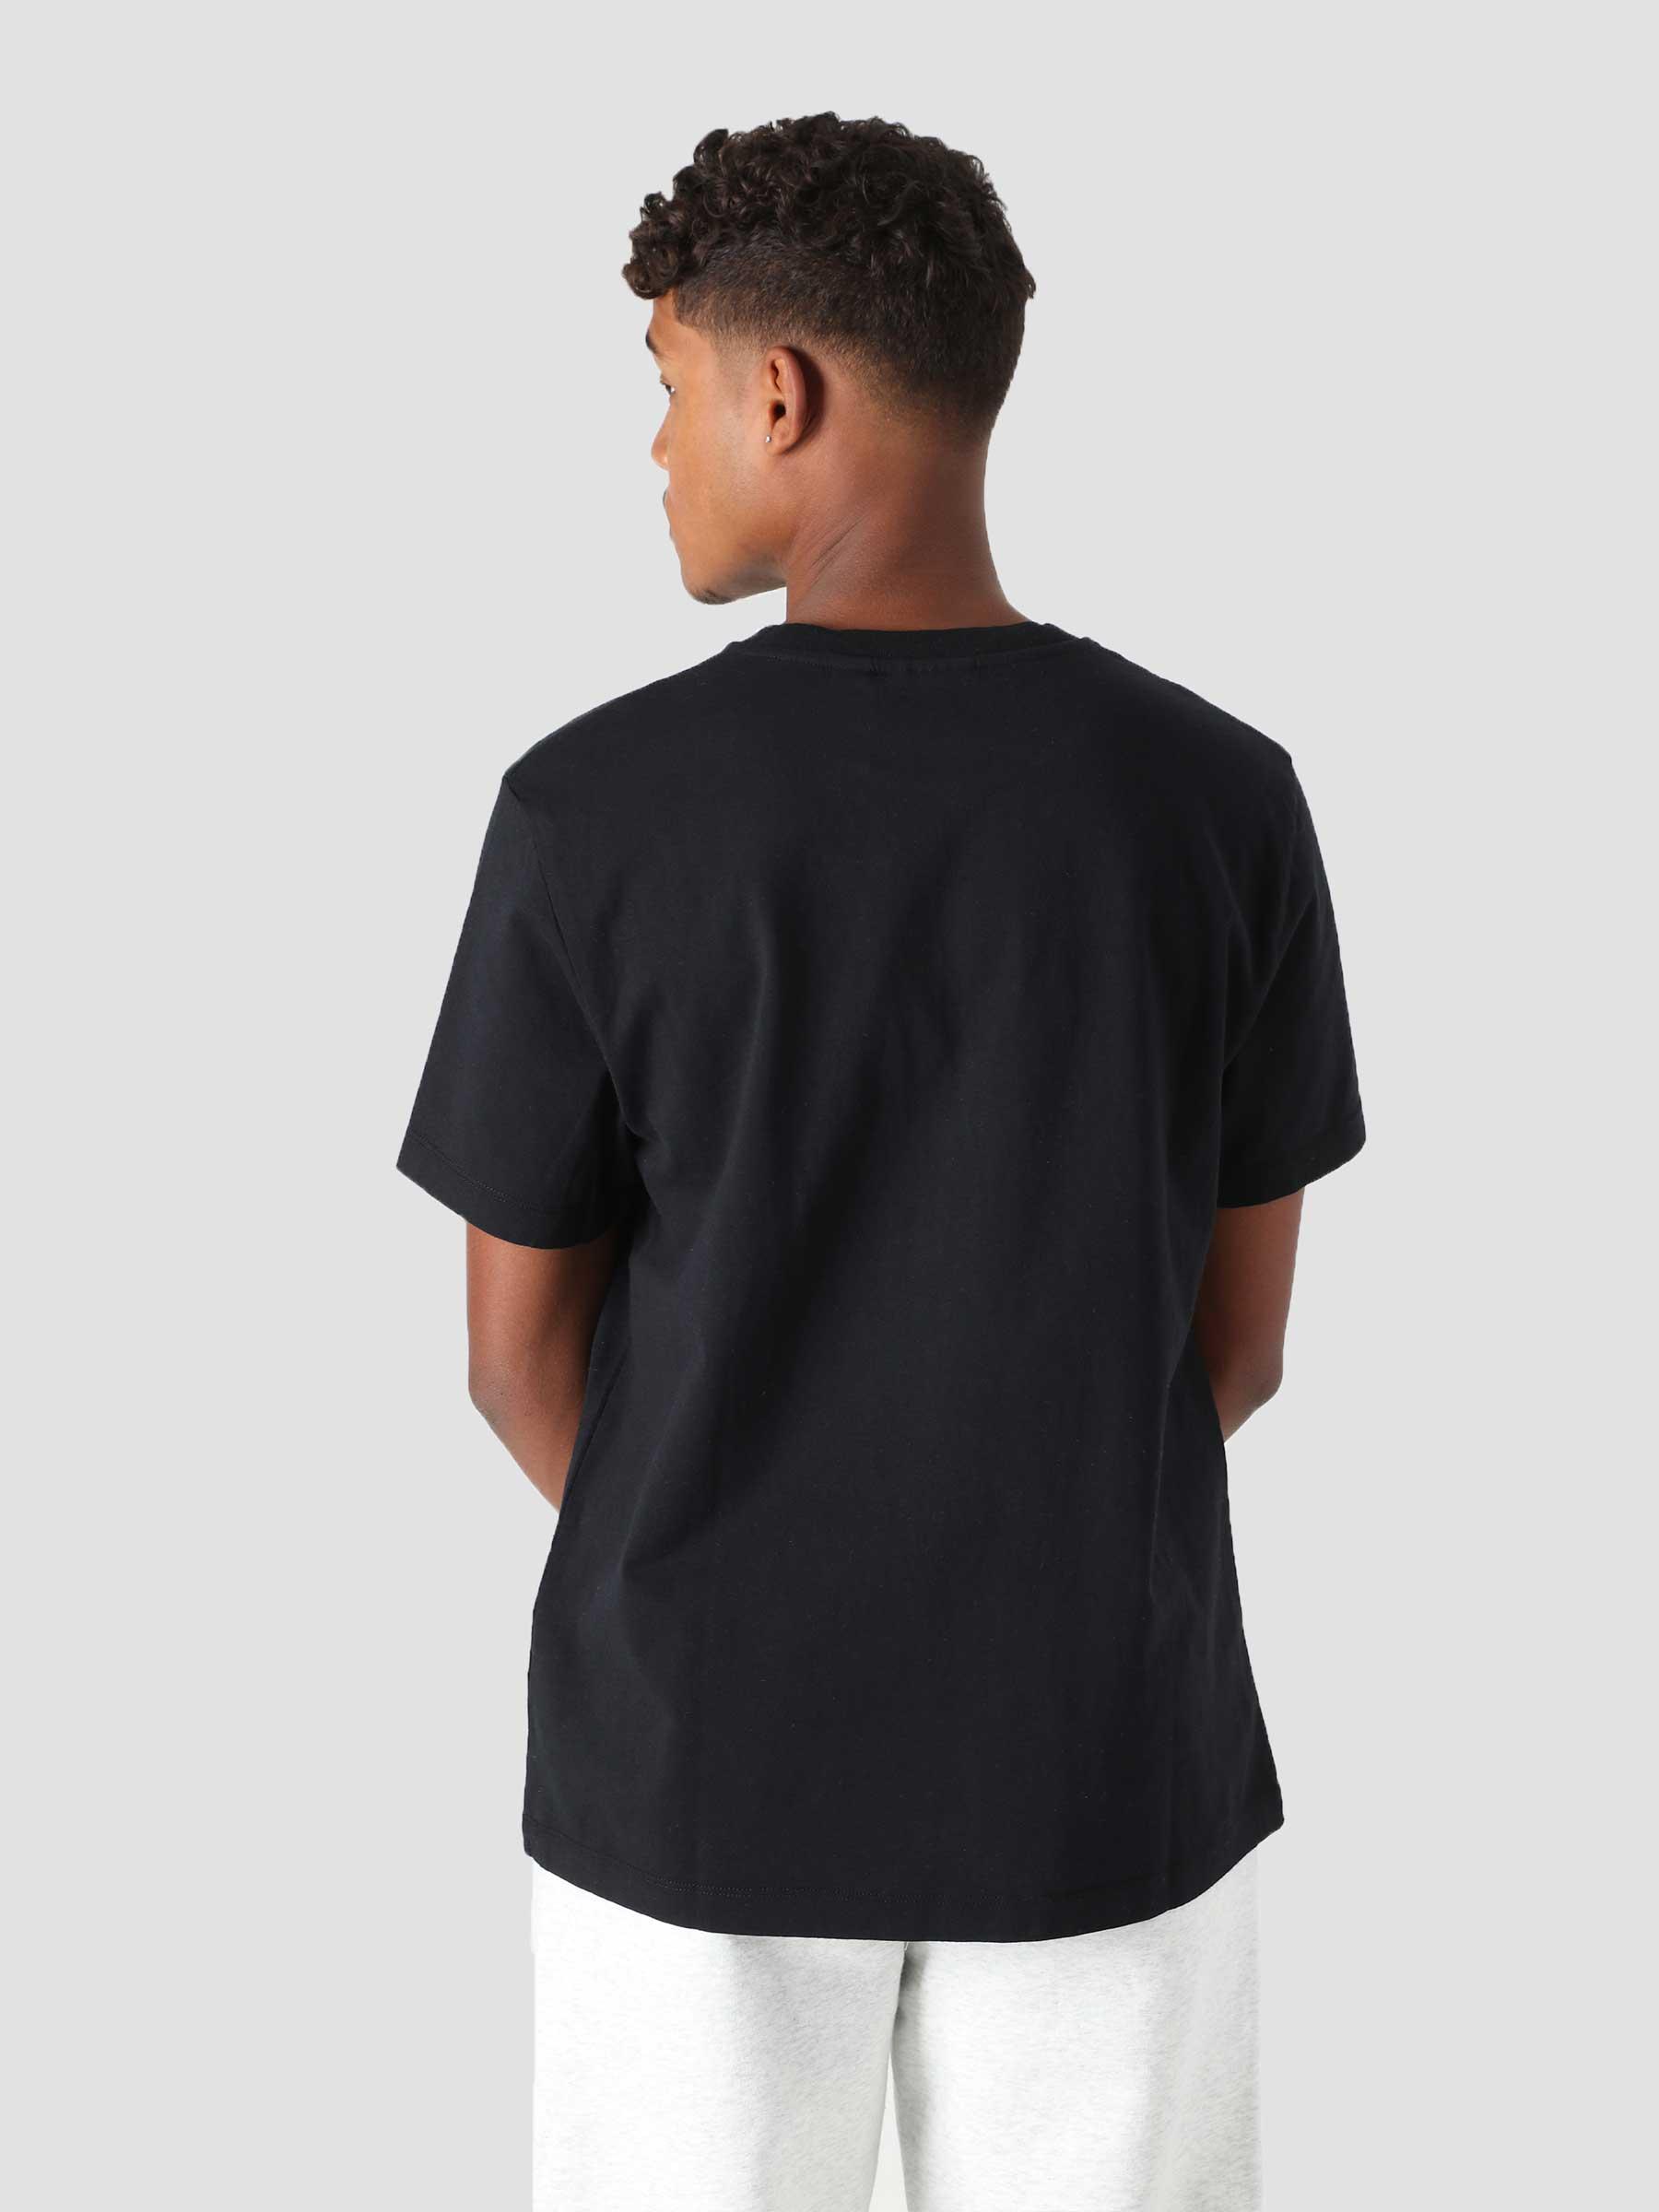 Jomo T-Shirt Black 46405